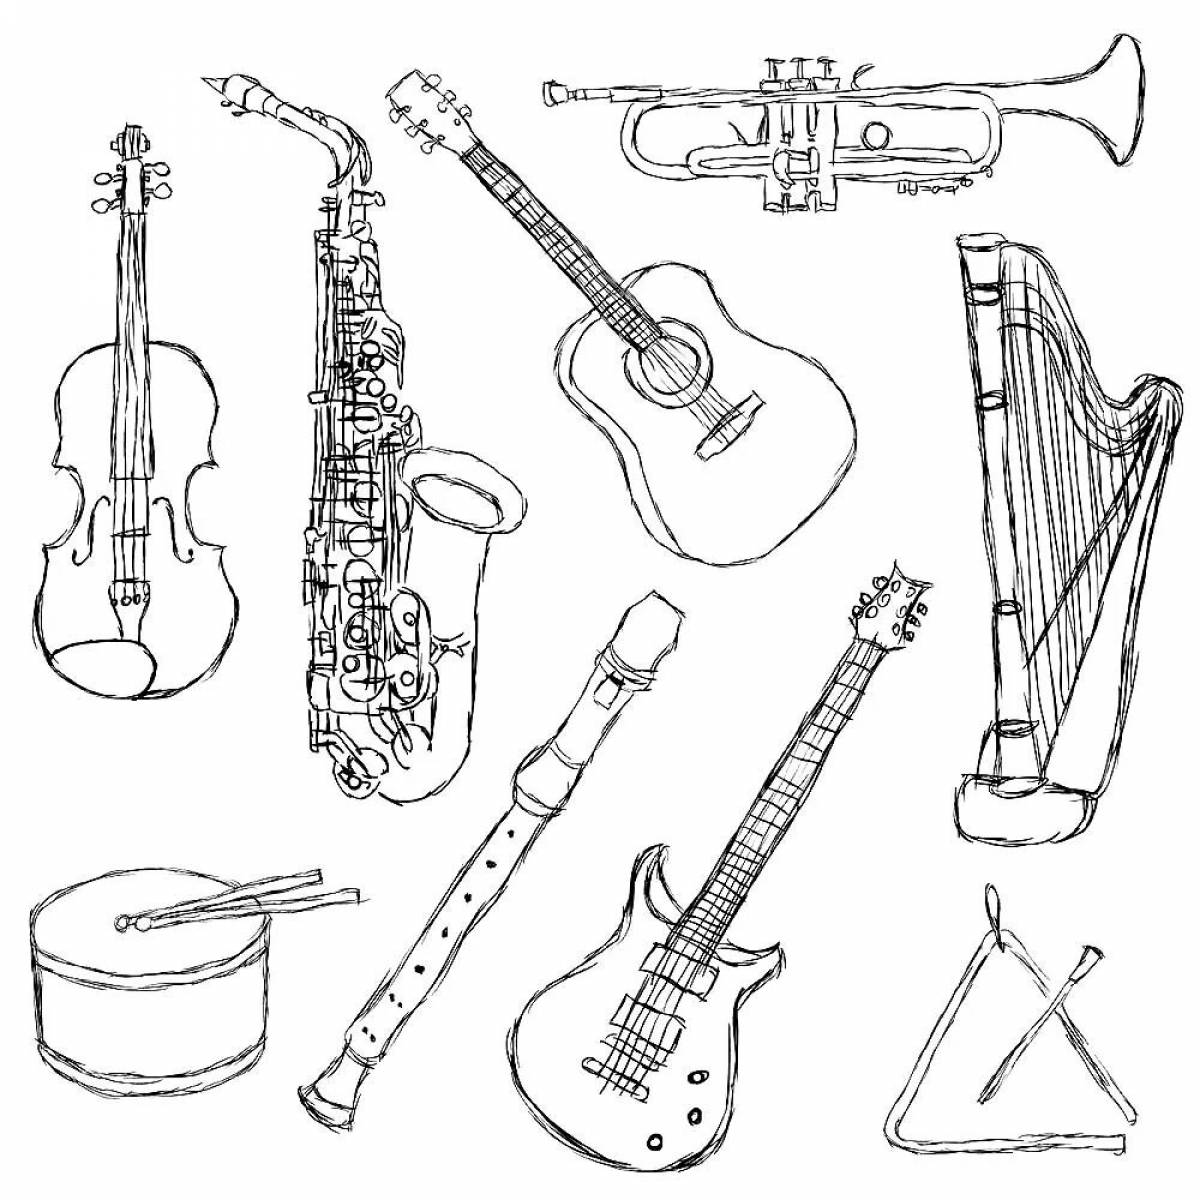 Musical instruments class 2 #5